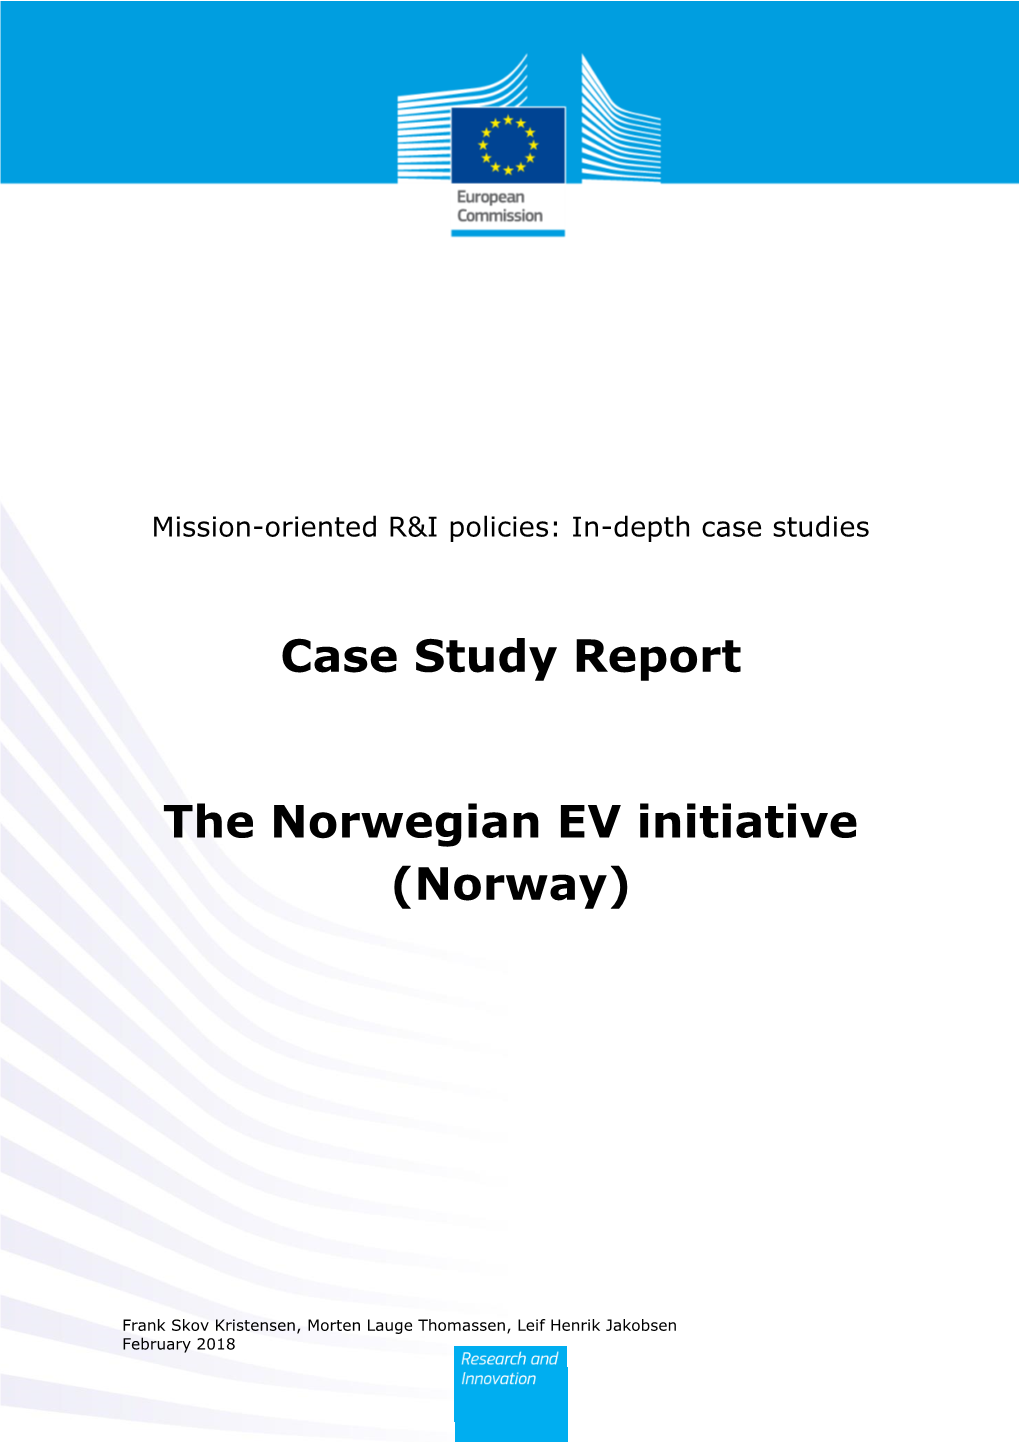 Case Study Report the Norwegian EV Initiative (Norway)